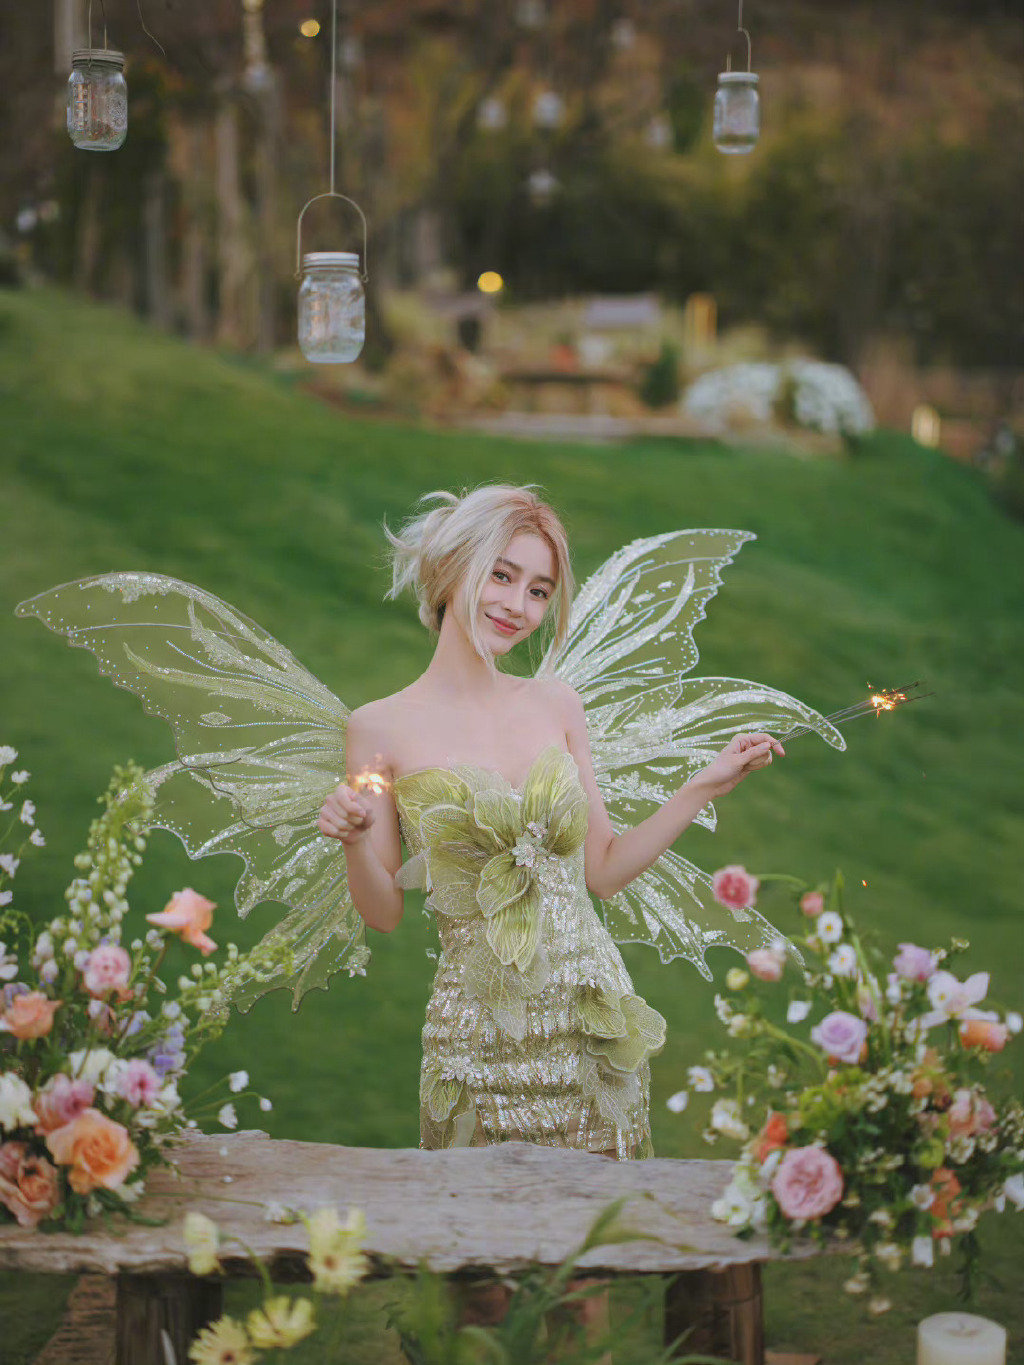 angelababy身穿绿色闪光裙搭配翅膀造型,置身草坪之上,好似精灵少女!